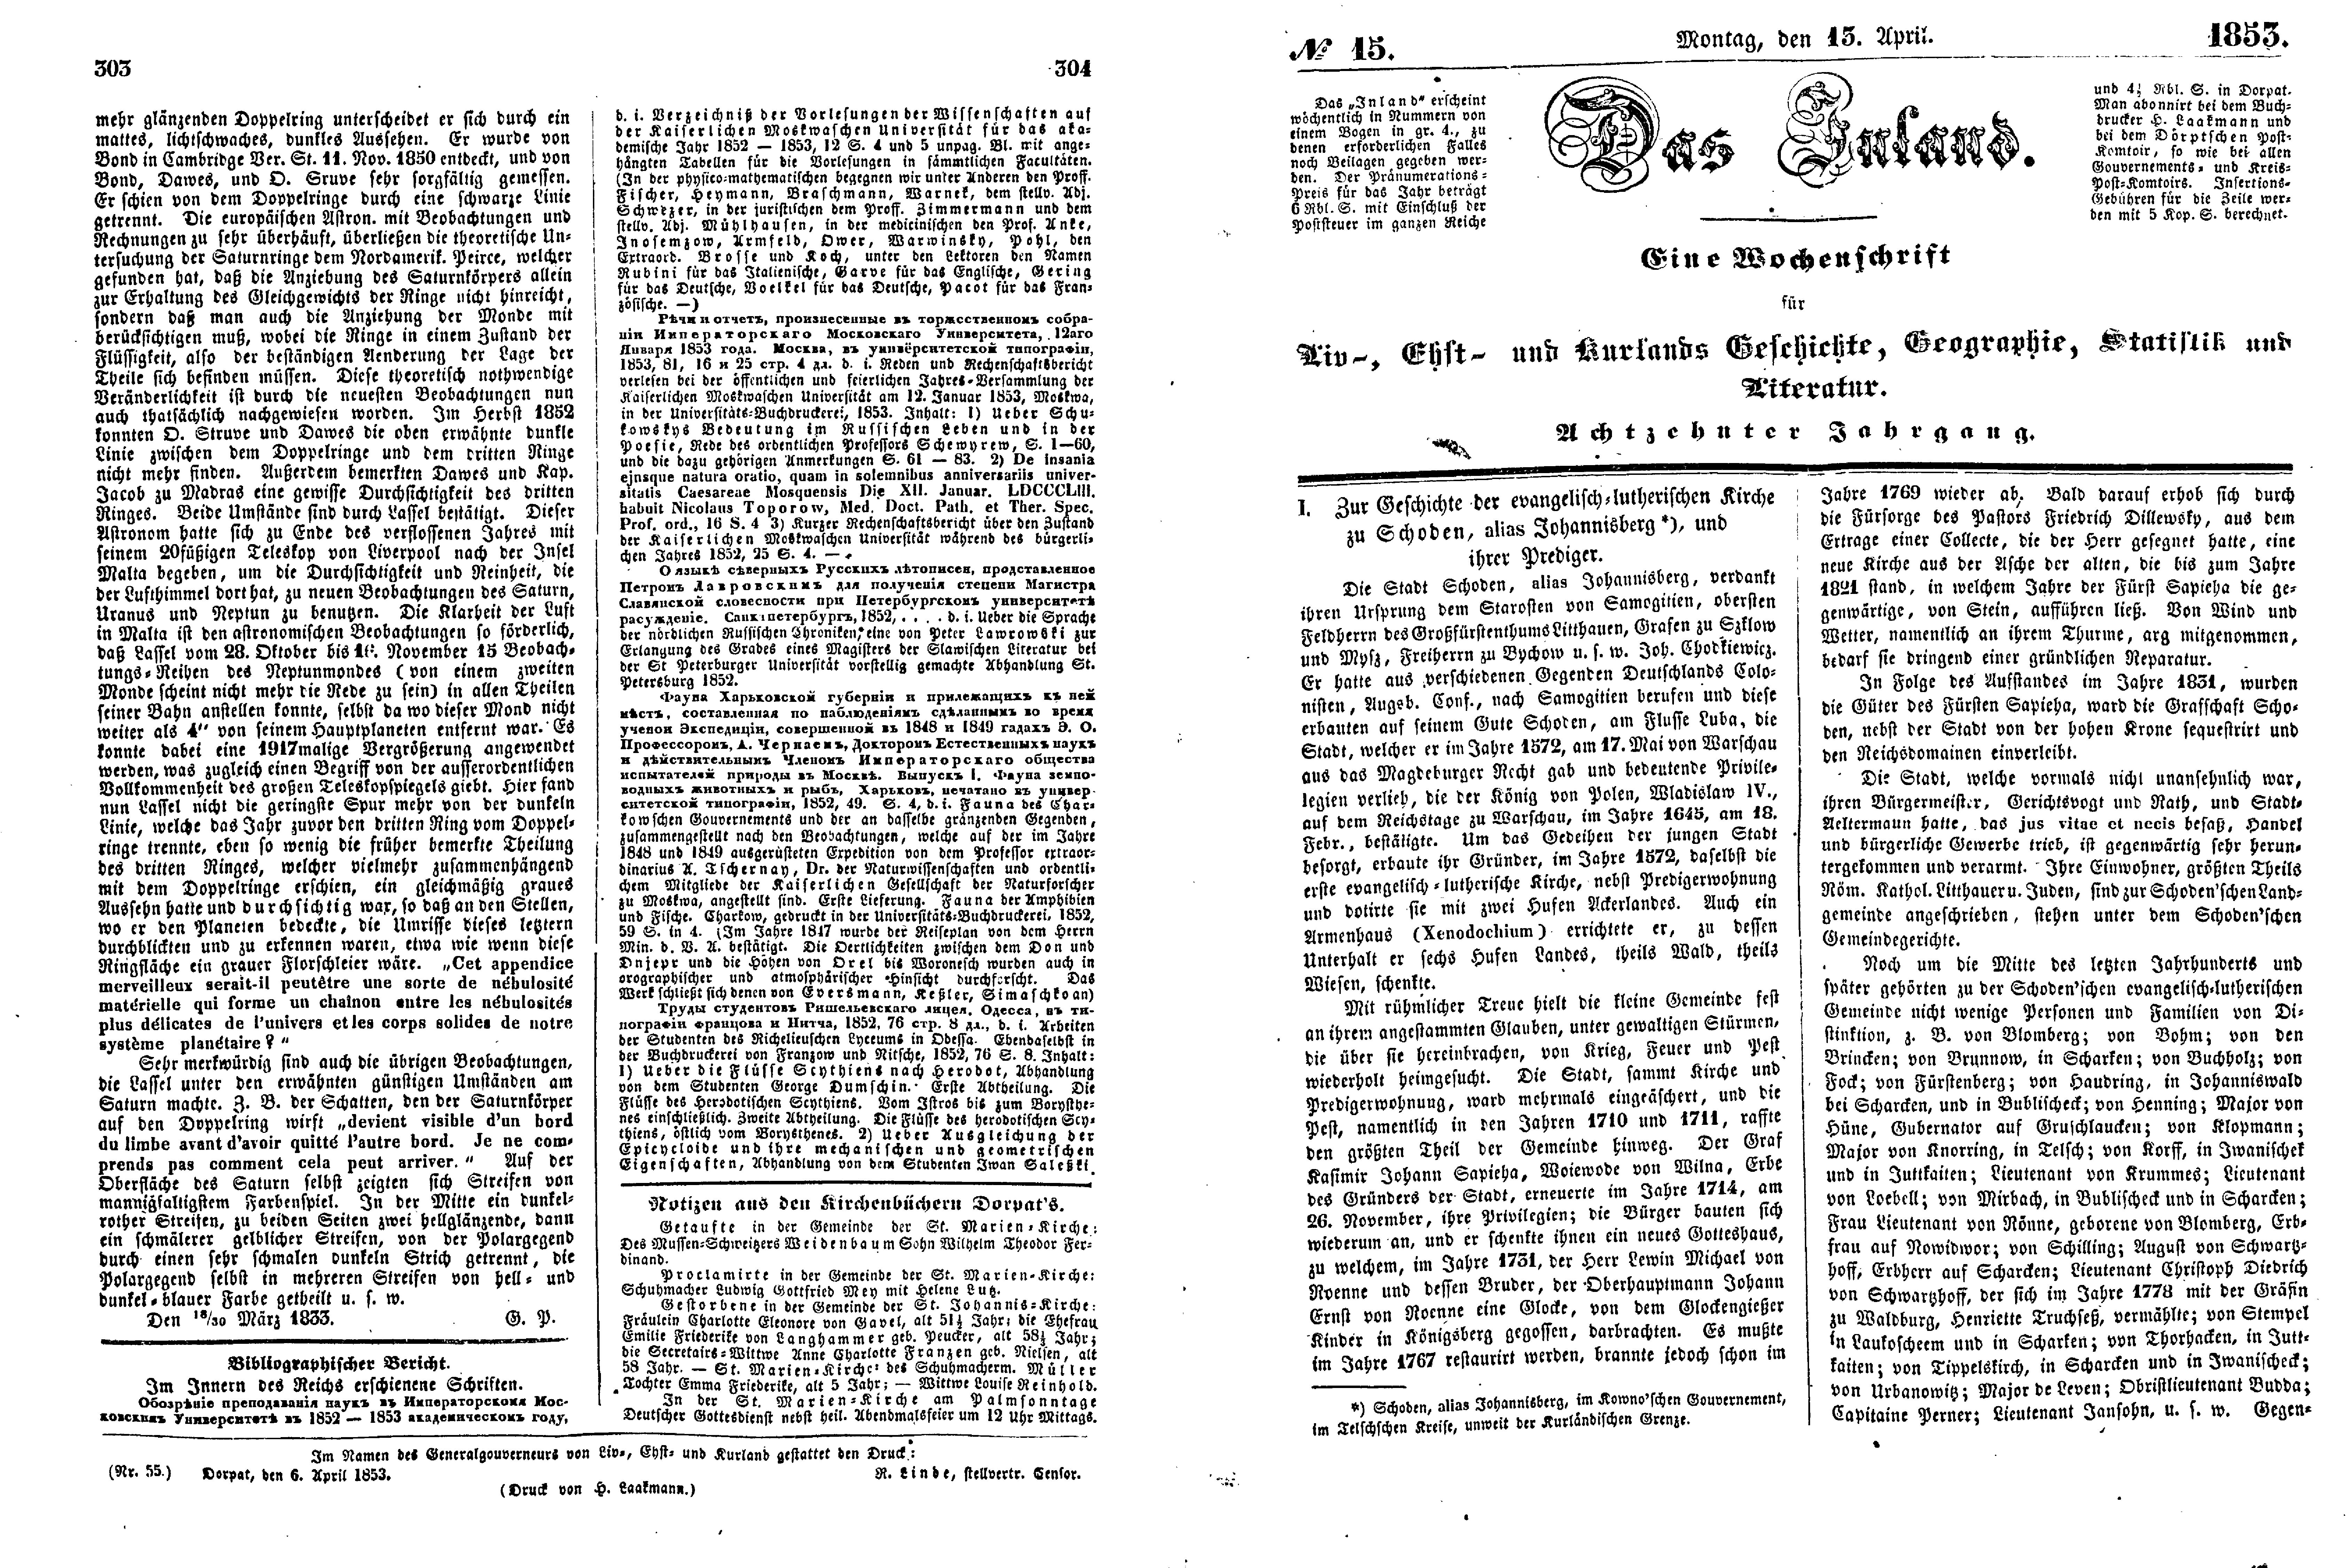 Das Inland [18] (1853) | 86. (303-306) Main body of text